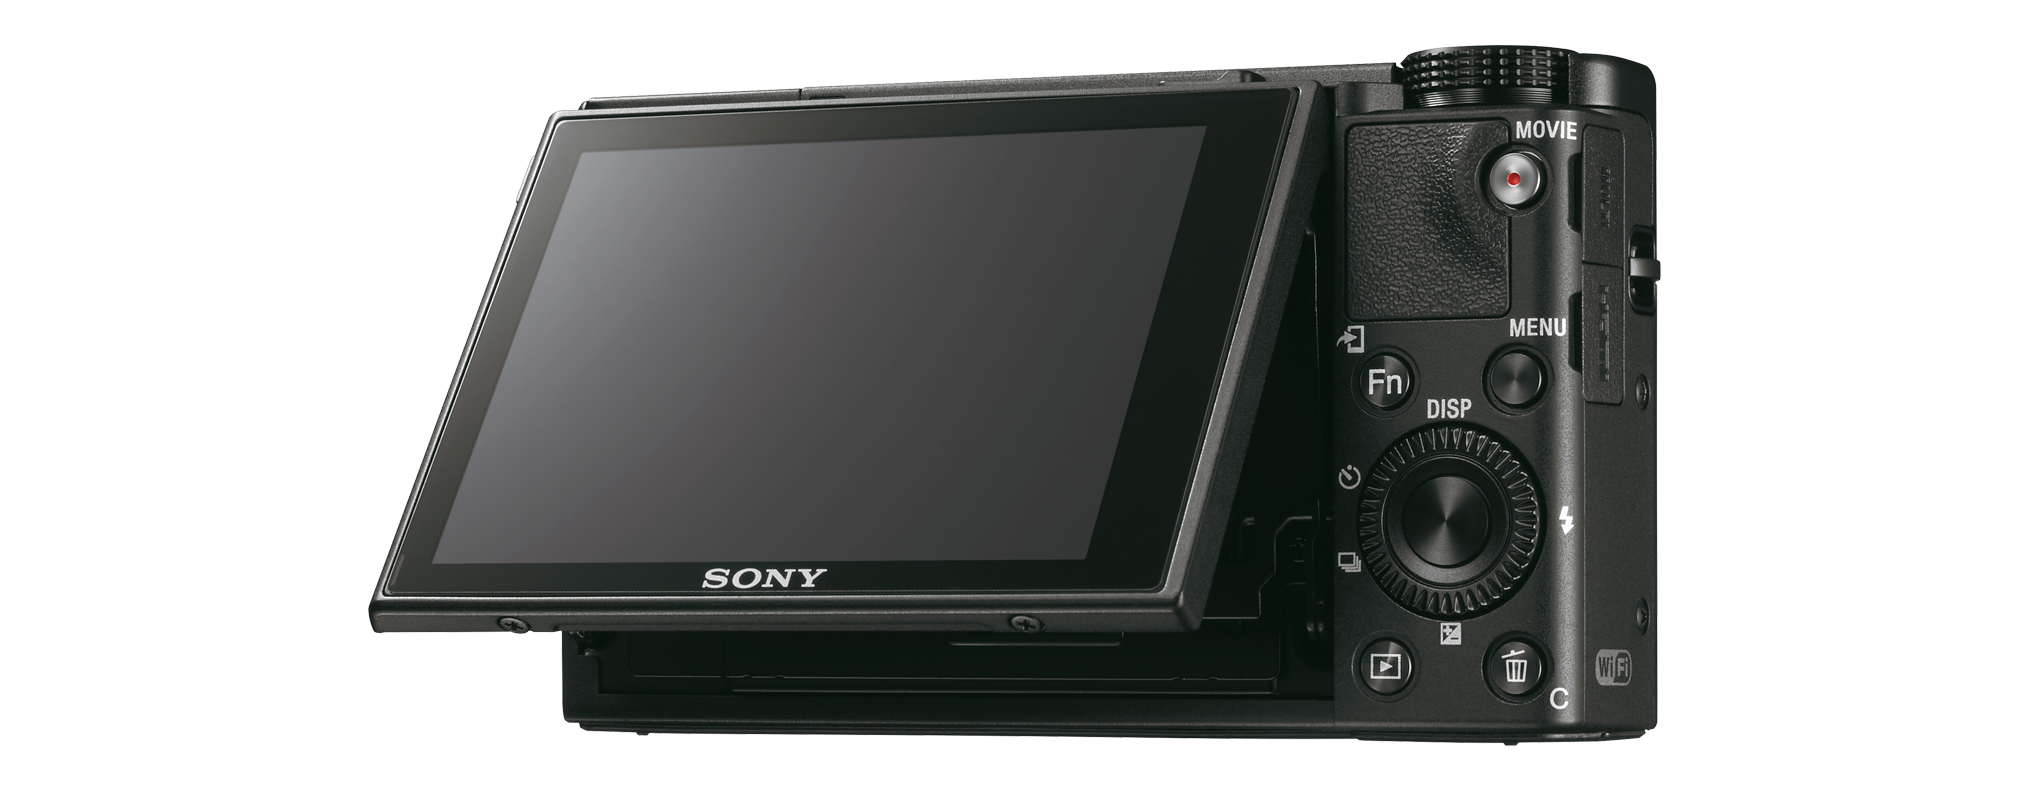 SONY Cyber-shot Schwarz, Xtra Zoom, Zeiss Fine/TFT-LCD, WLAN 2.9x , Digitalkamera NFC opt. DSC-RX100 VA